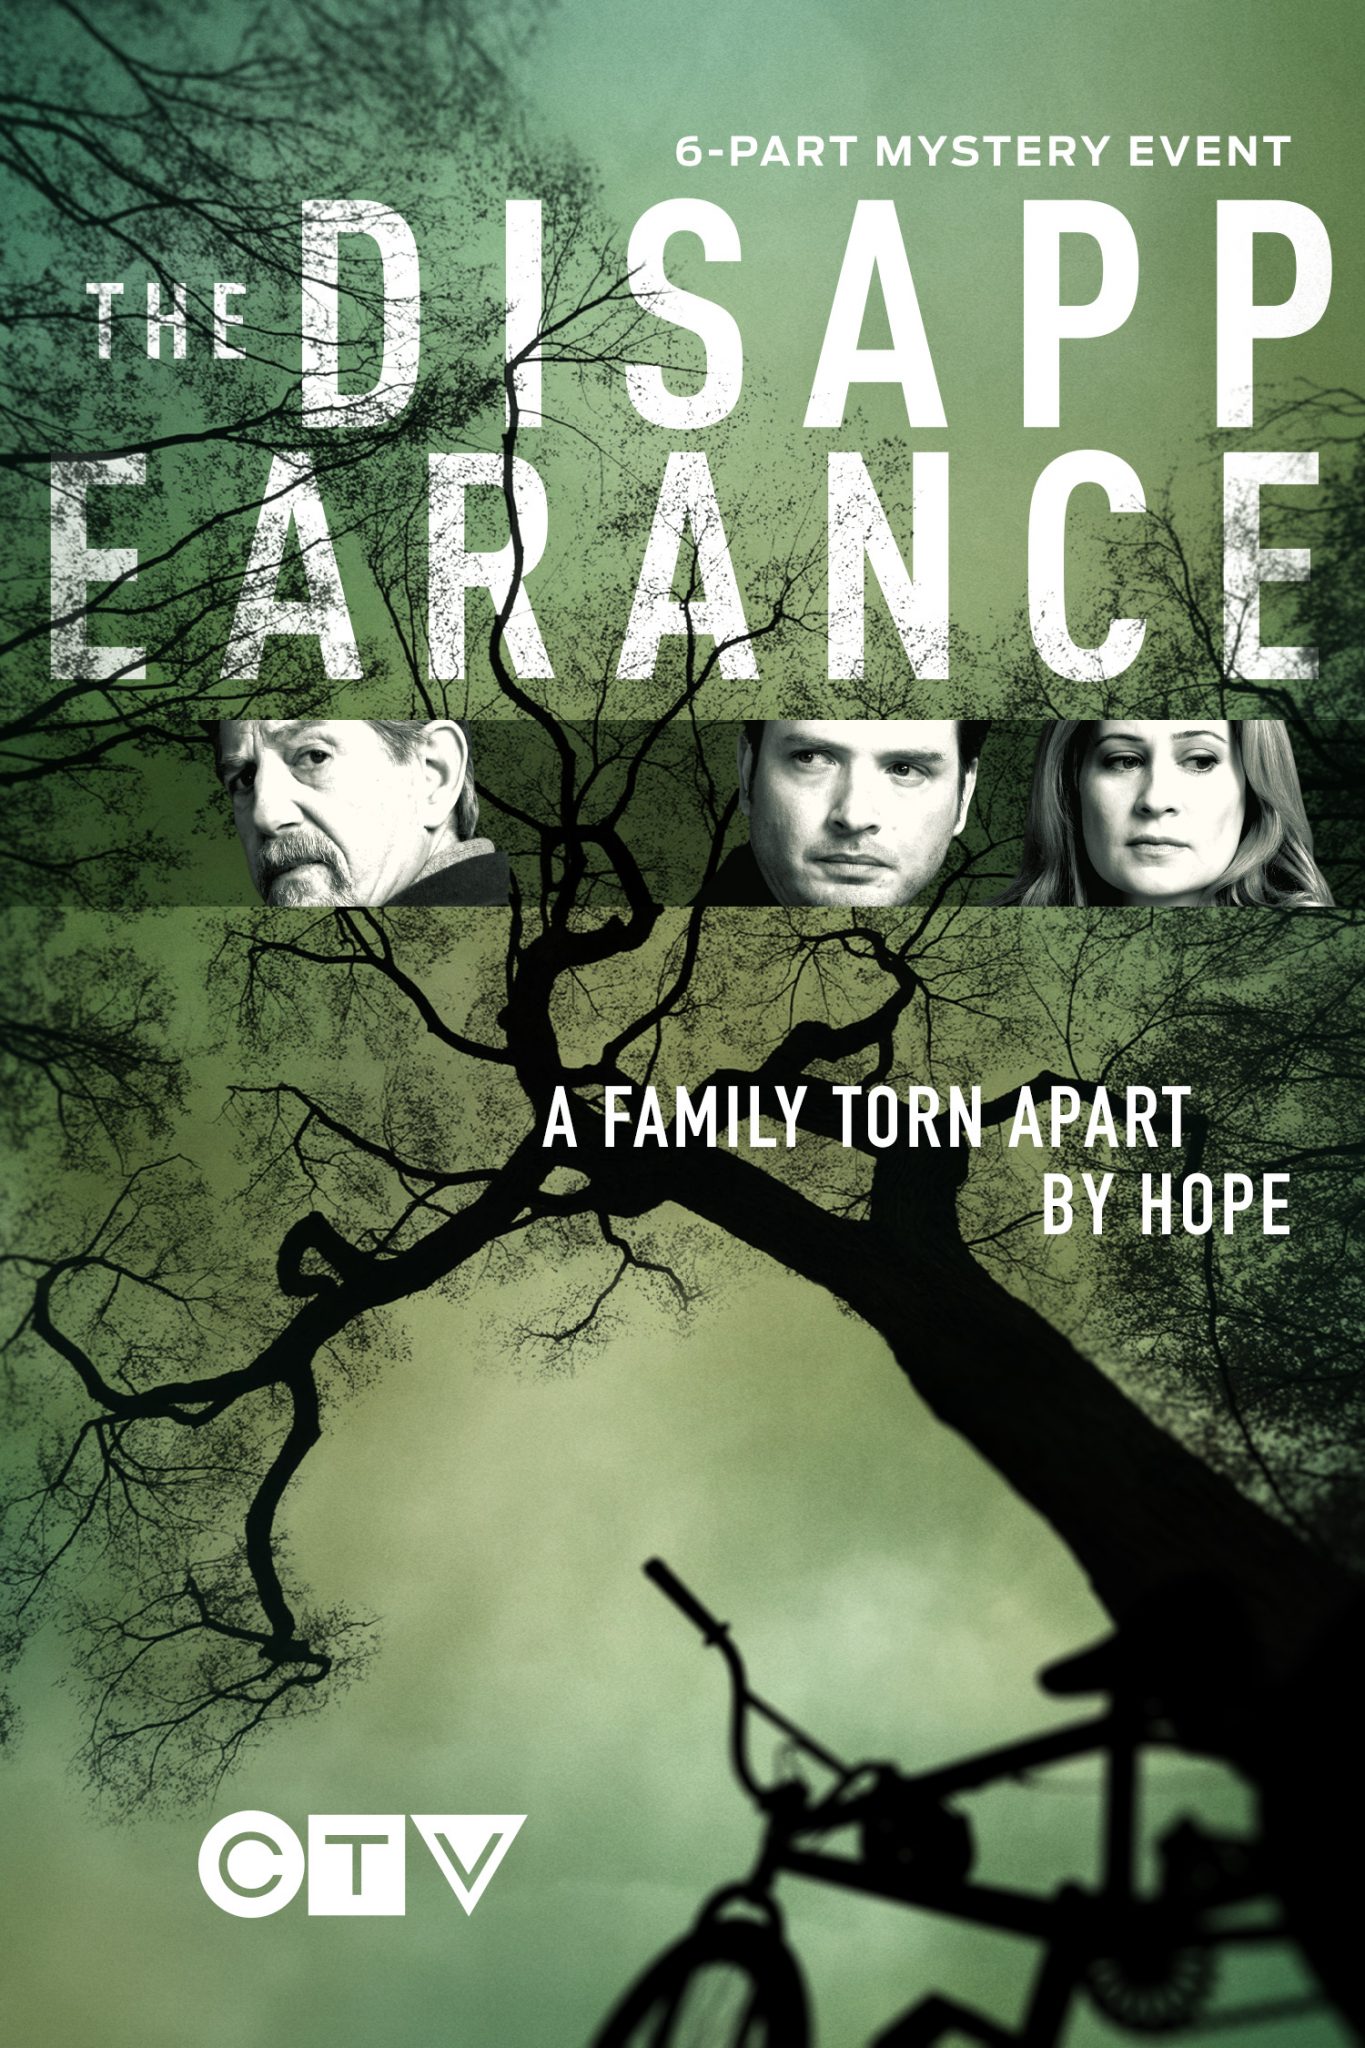 The Disappearance: misterio, suspenso y drama familiar